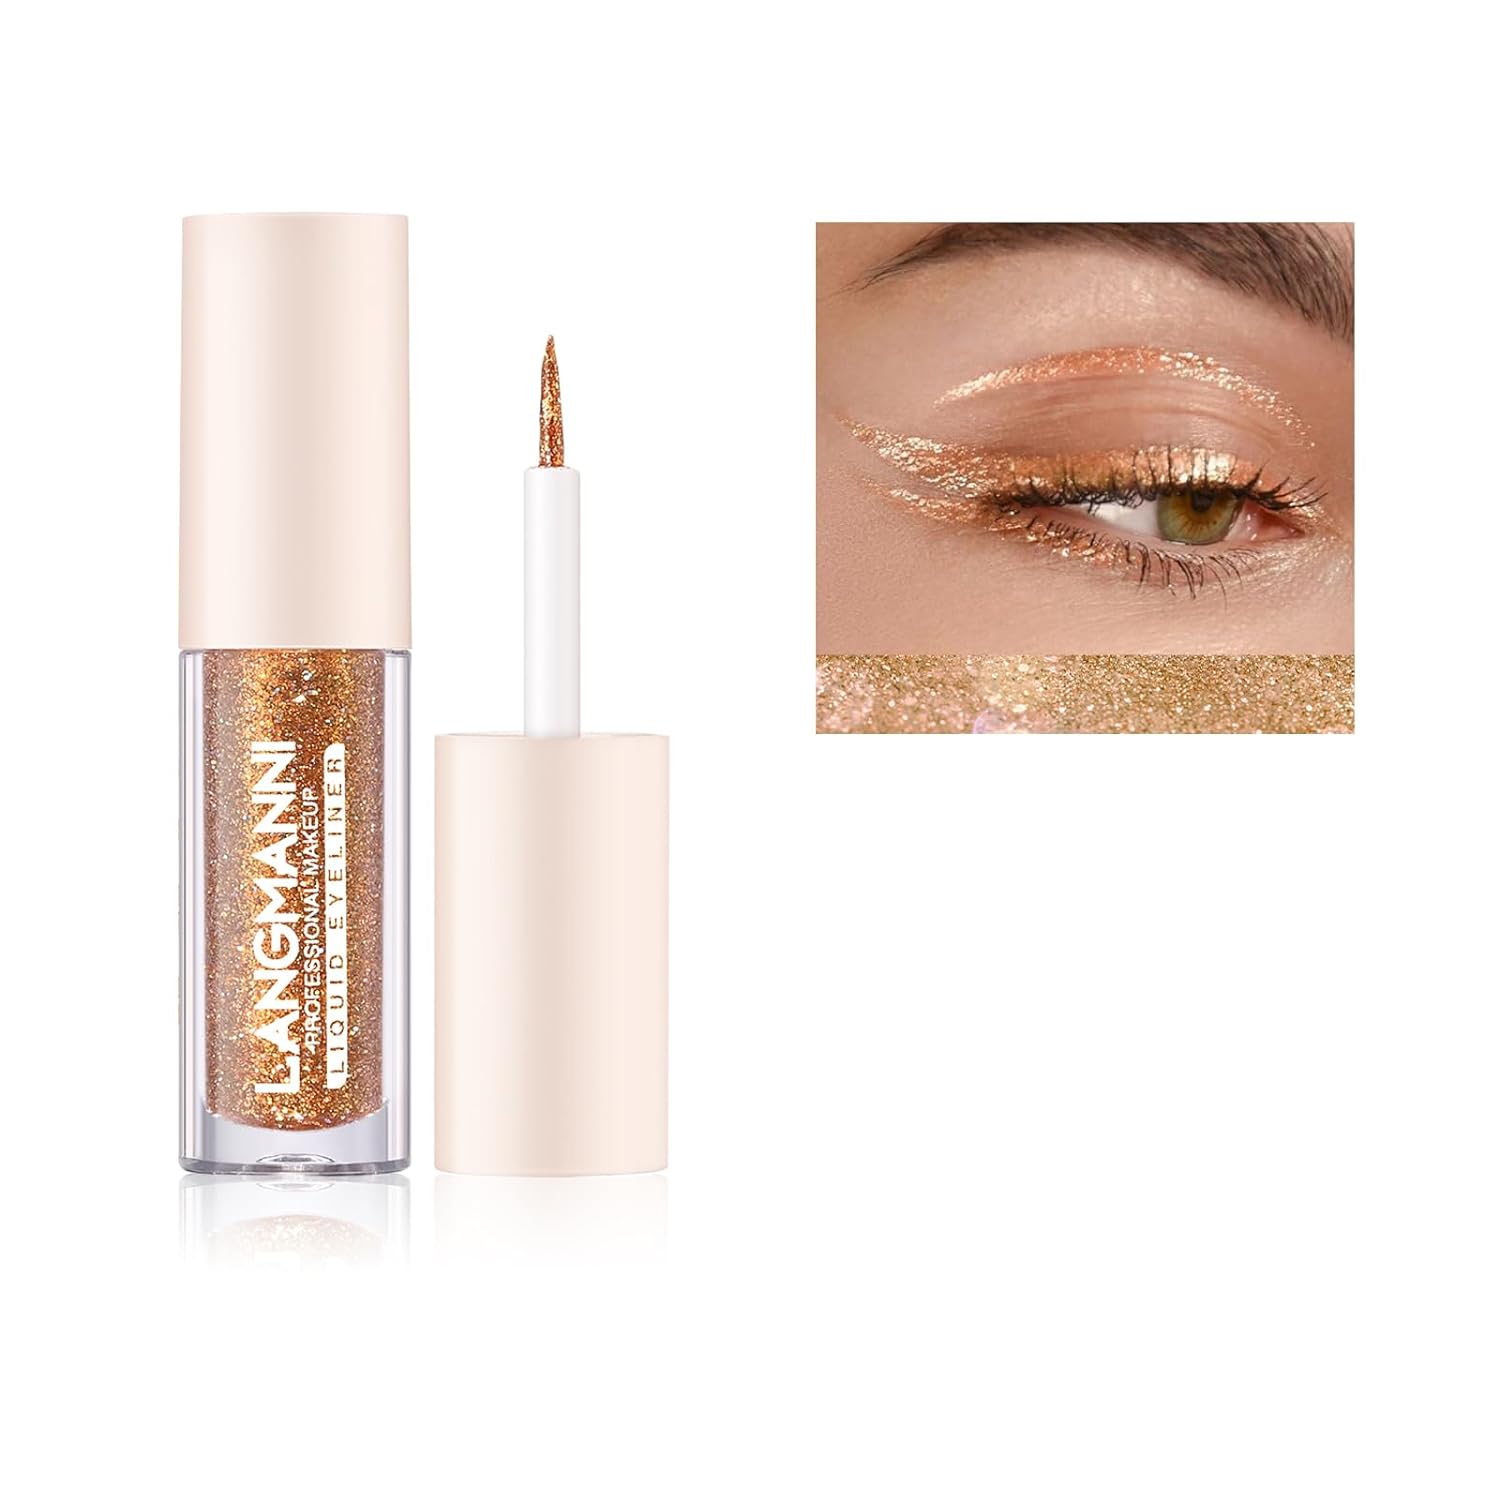 Quxunzzz Liquid Glitter Eyeshadow,Liquid Glitter Eyeliner Metallic Glitter Shimmer Eye Looks Waterproof Long Lasting Quick-Drying (Galaxy 08#)